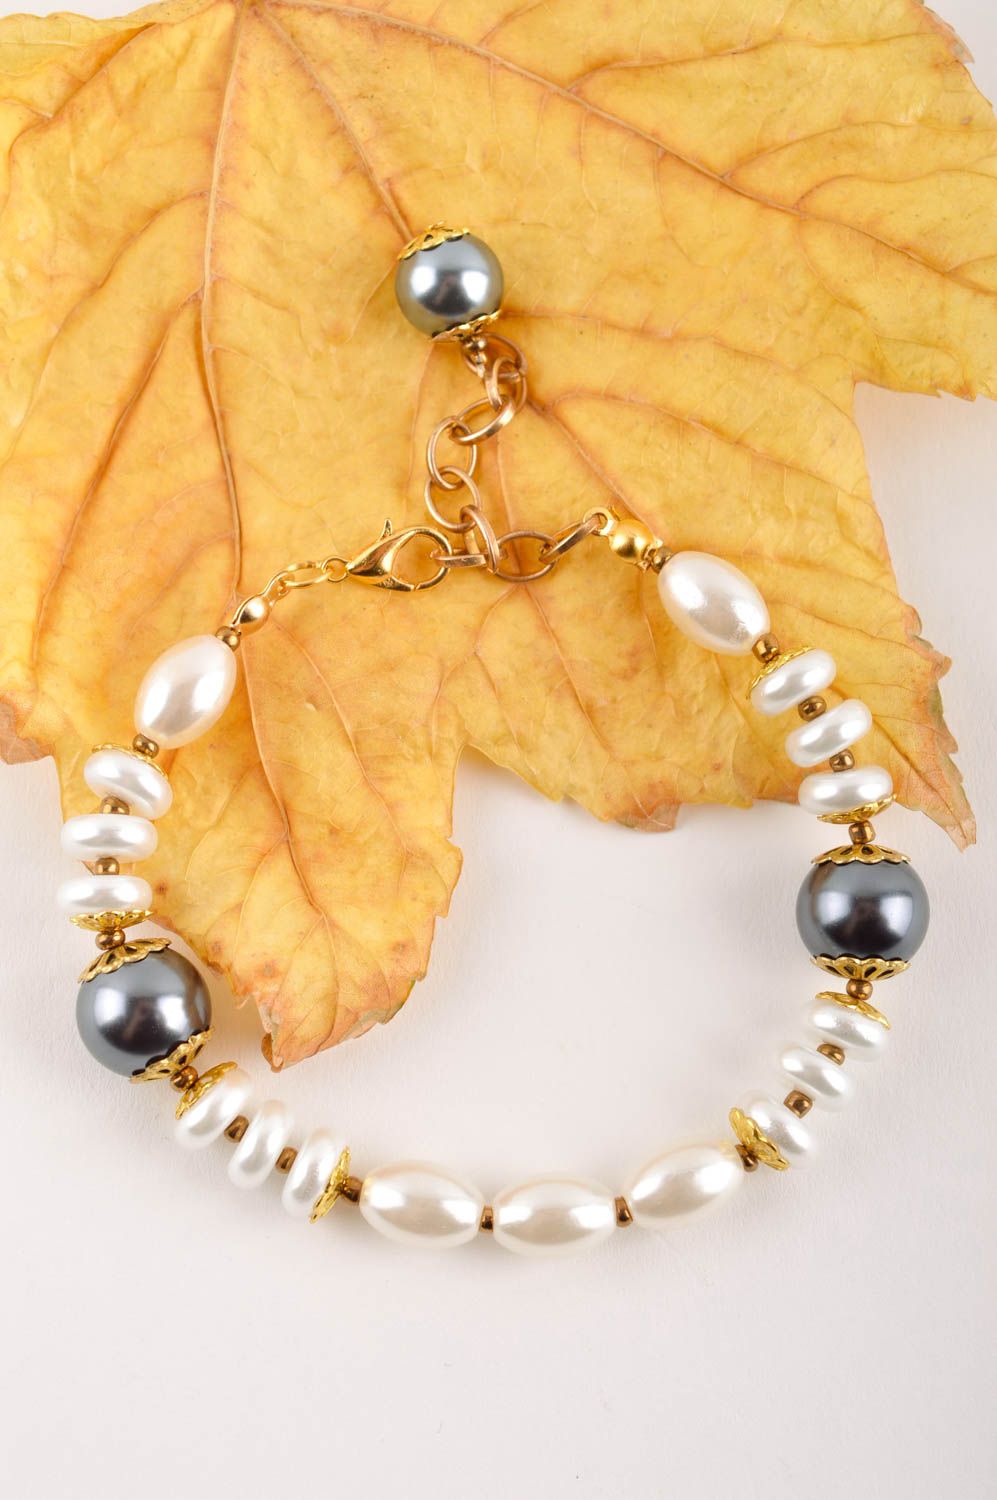 Handmade bracelet on chain evening accessory stylish jewelry present for women photo 1